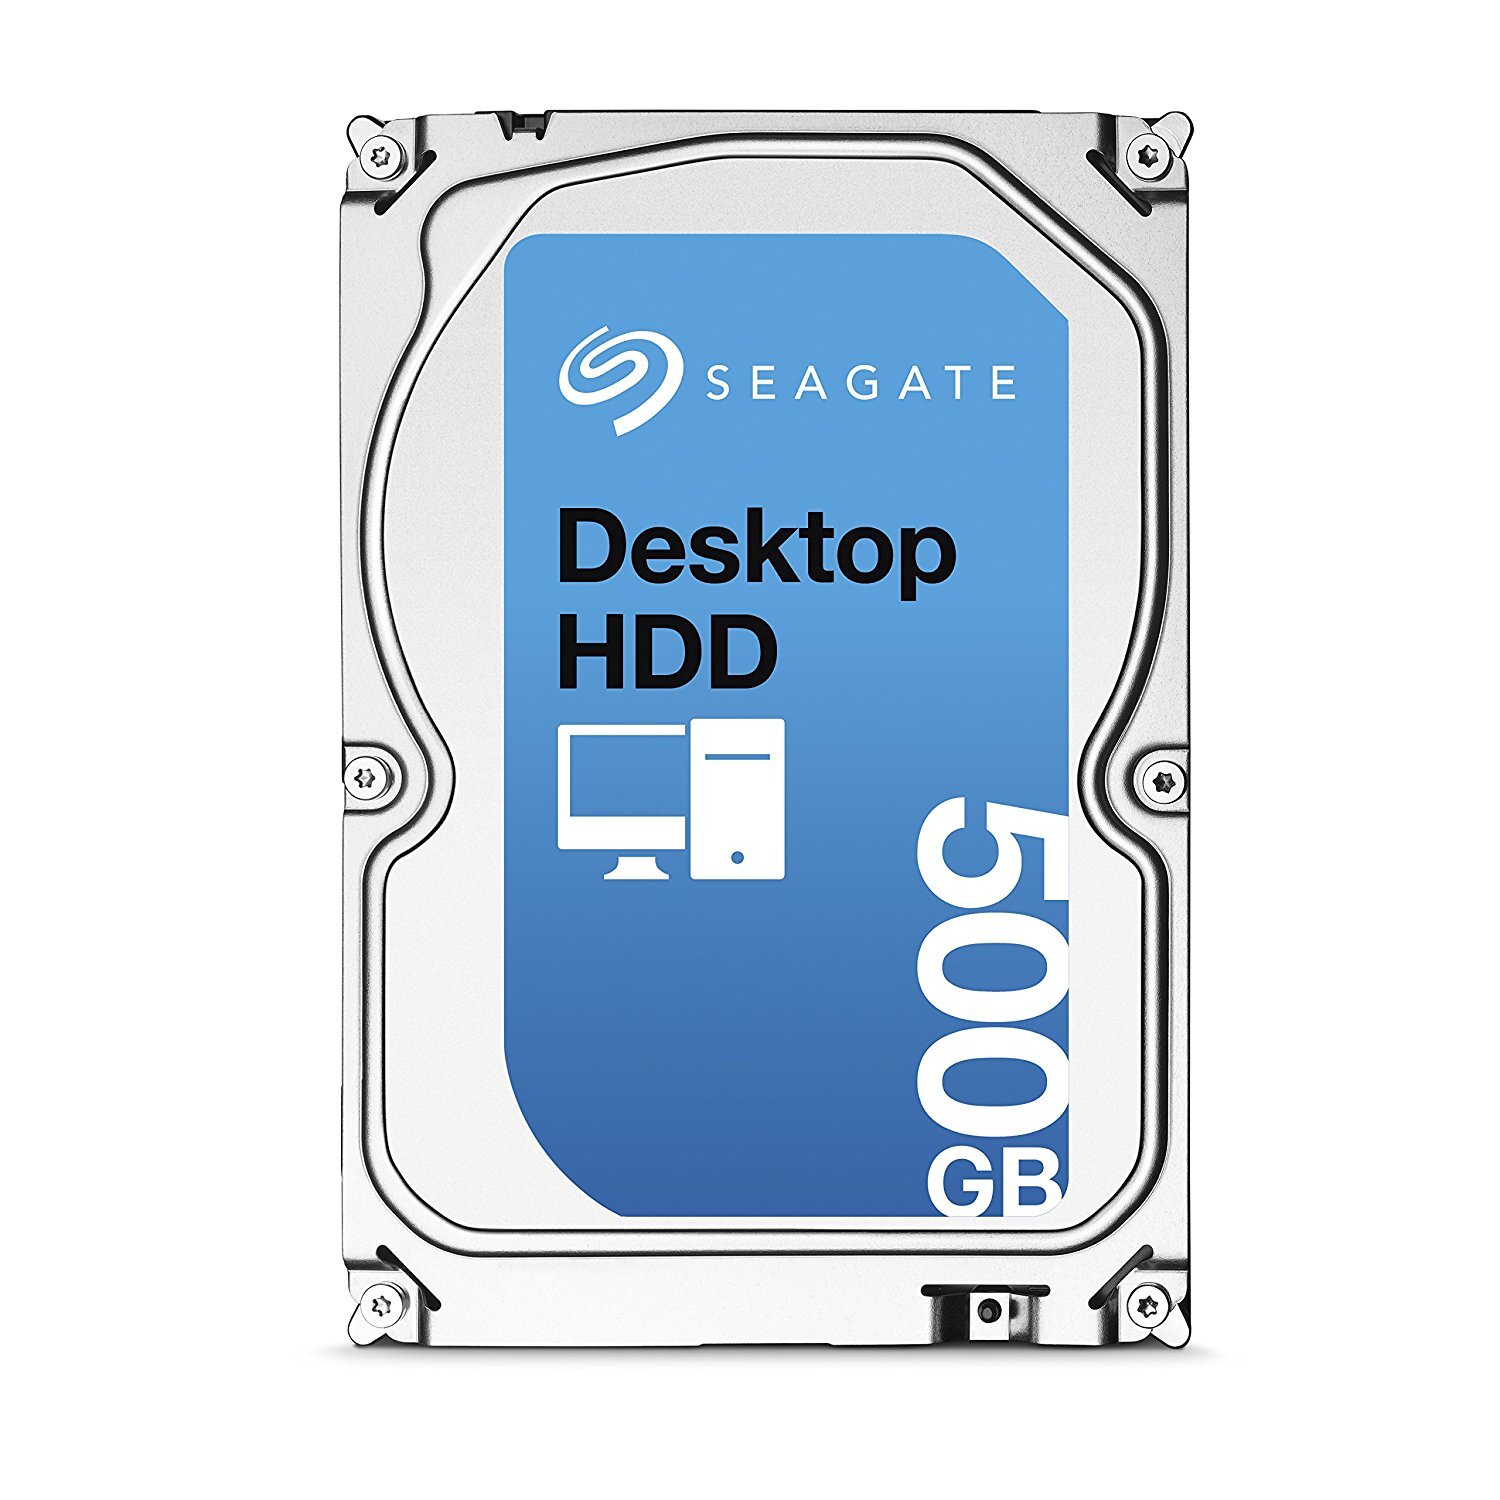 Seagate Desktop HDD 500GB SATA3